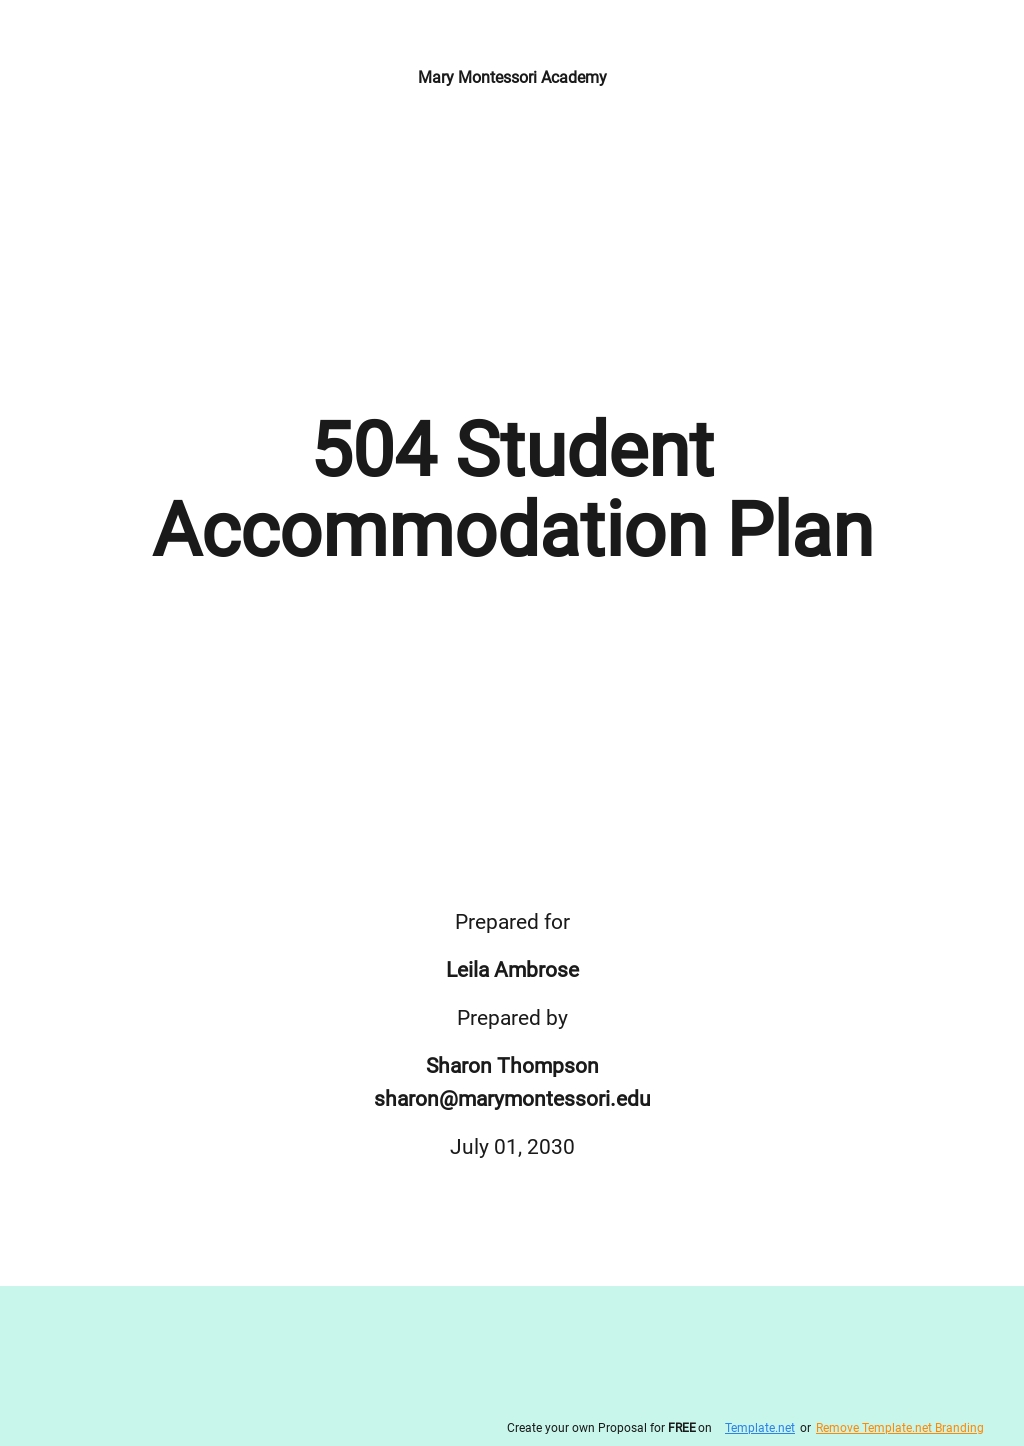 504 plan accommodations